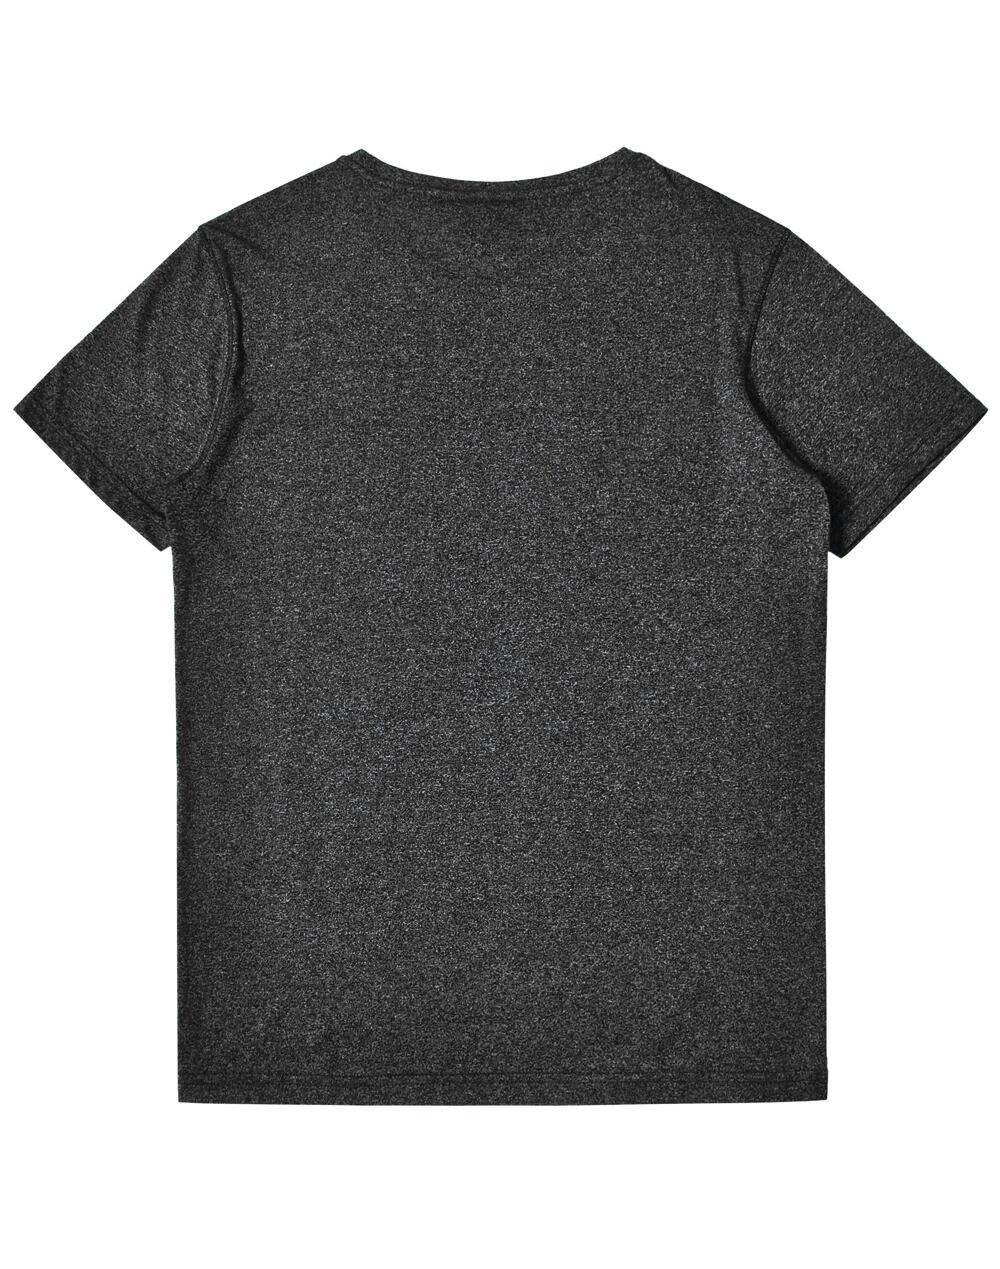 Custom Styles (Black) Mens Heather T-Shirts Online in Perth Australia